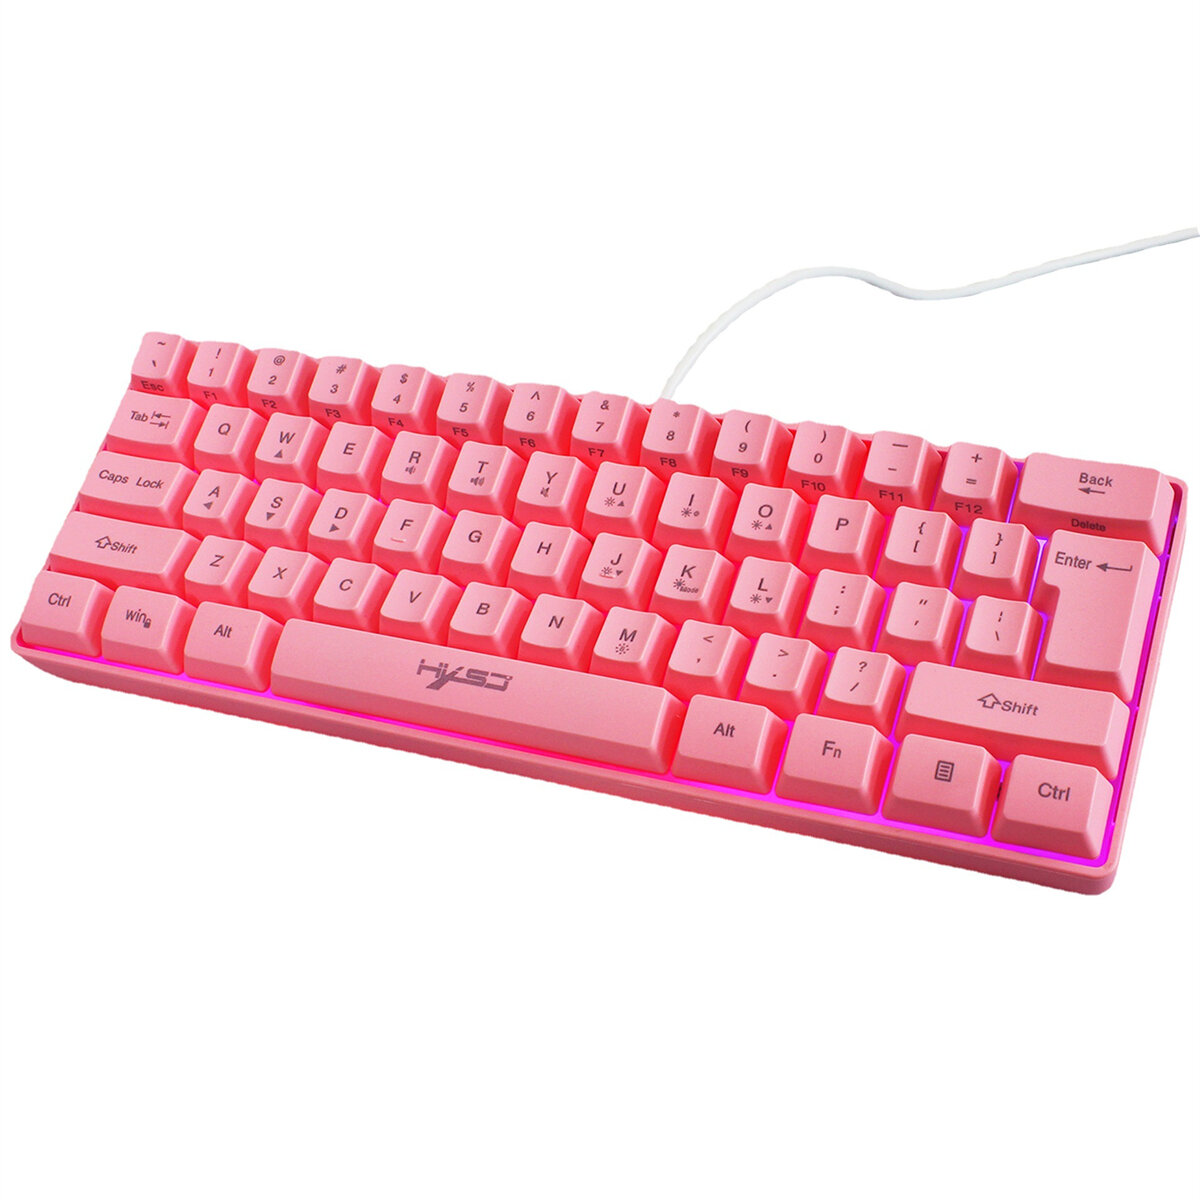 HXSJ V700 Wired Keyboard 61 Keys USB Wired RGB Backlit Gaming Keyboard for Office Gamers